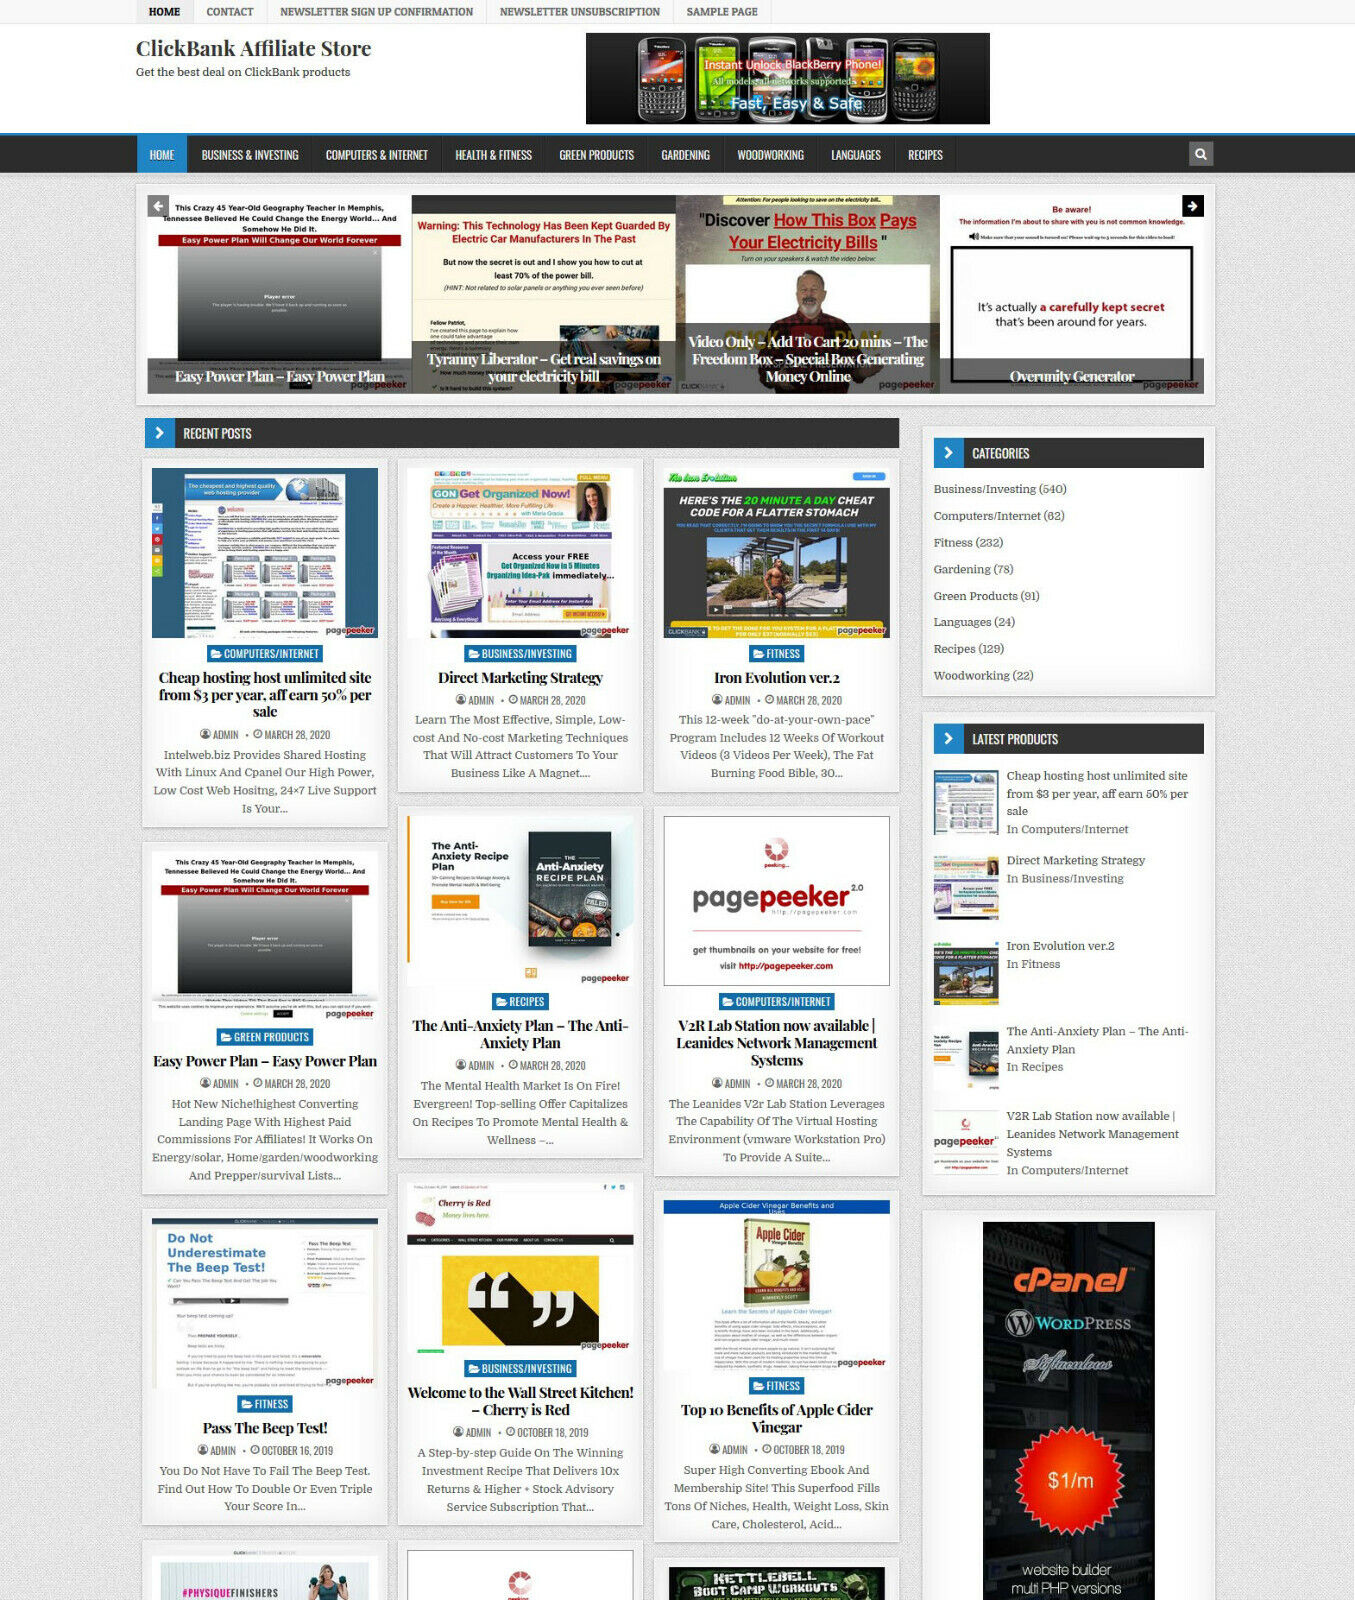 ClickBank Affiliate Store Website on AutoPilot